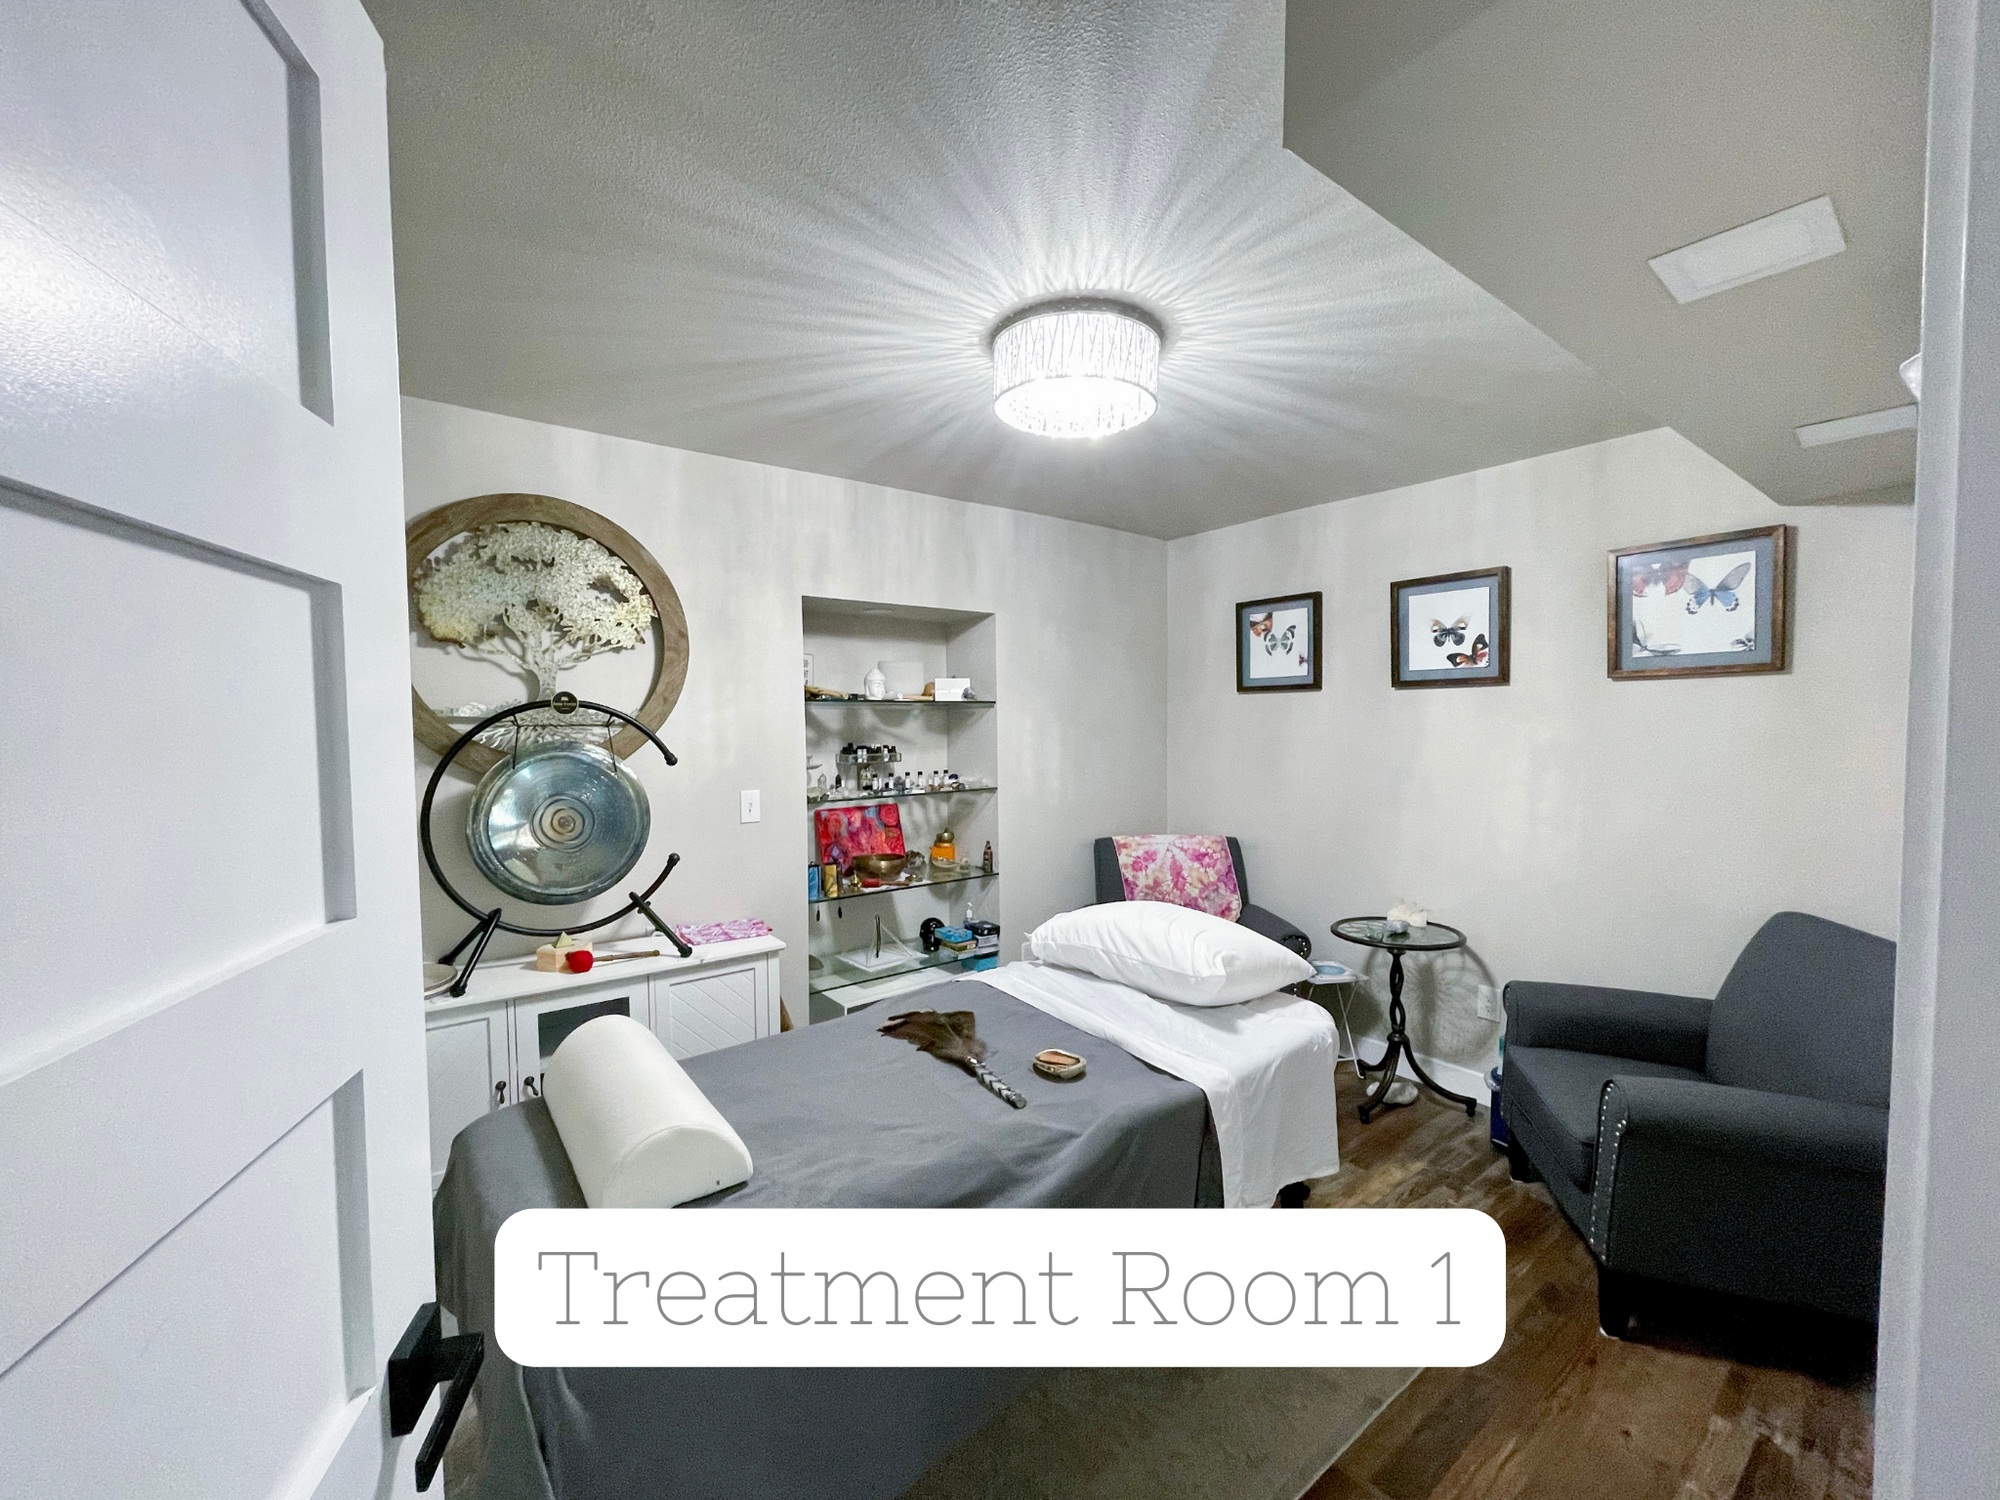 Weekday Treatment Room Rental - Room 1